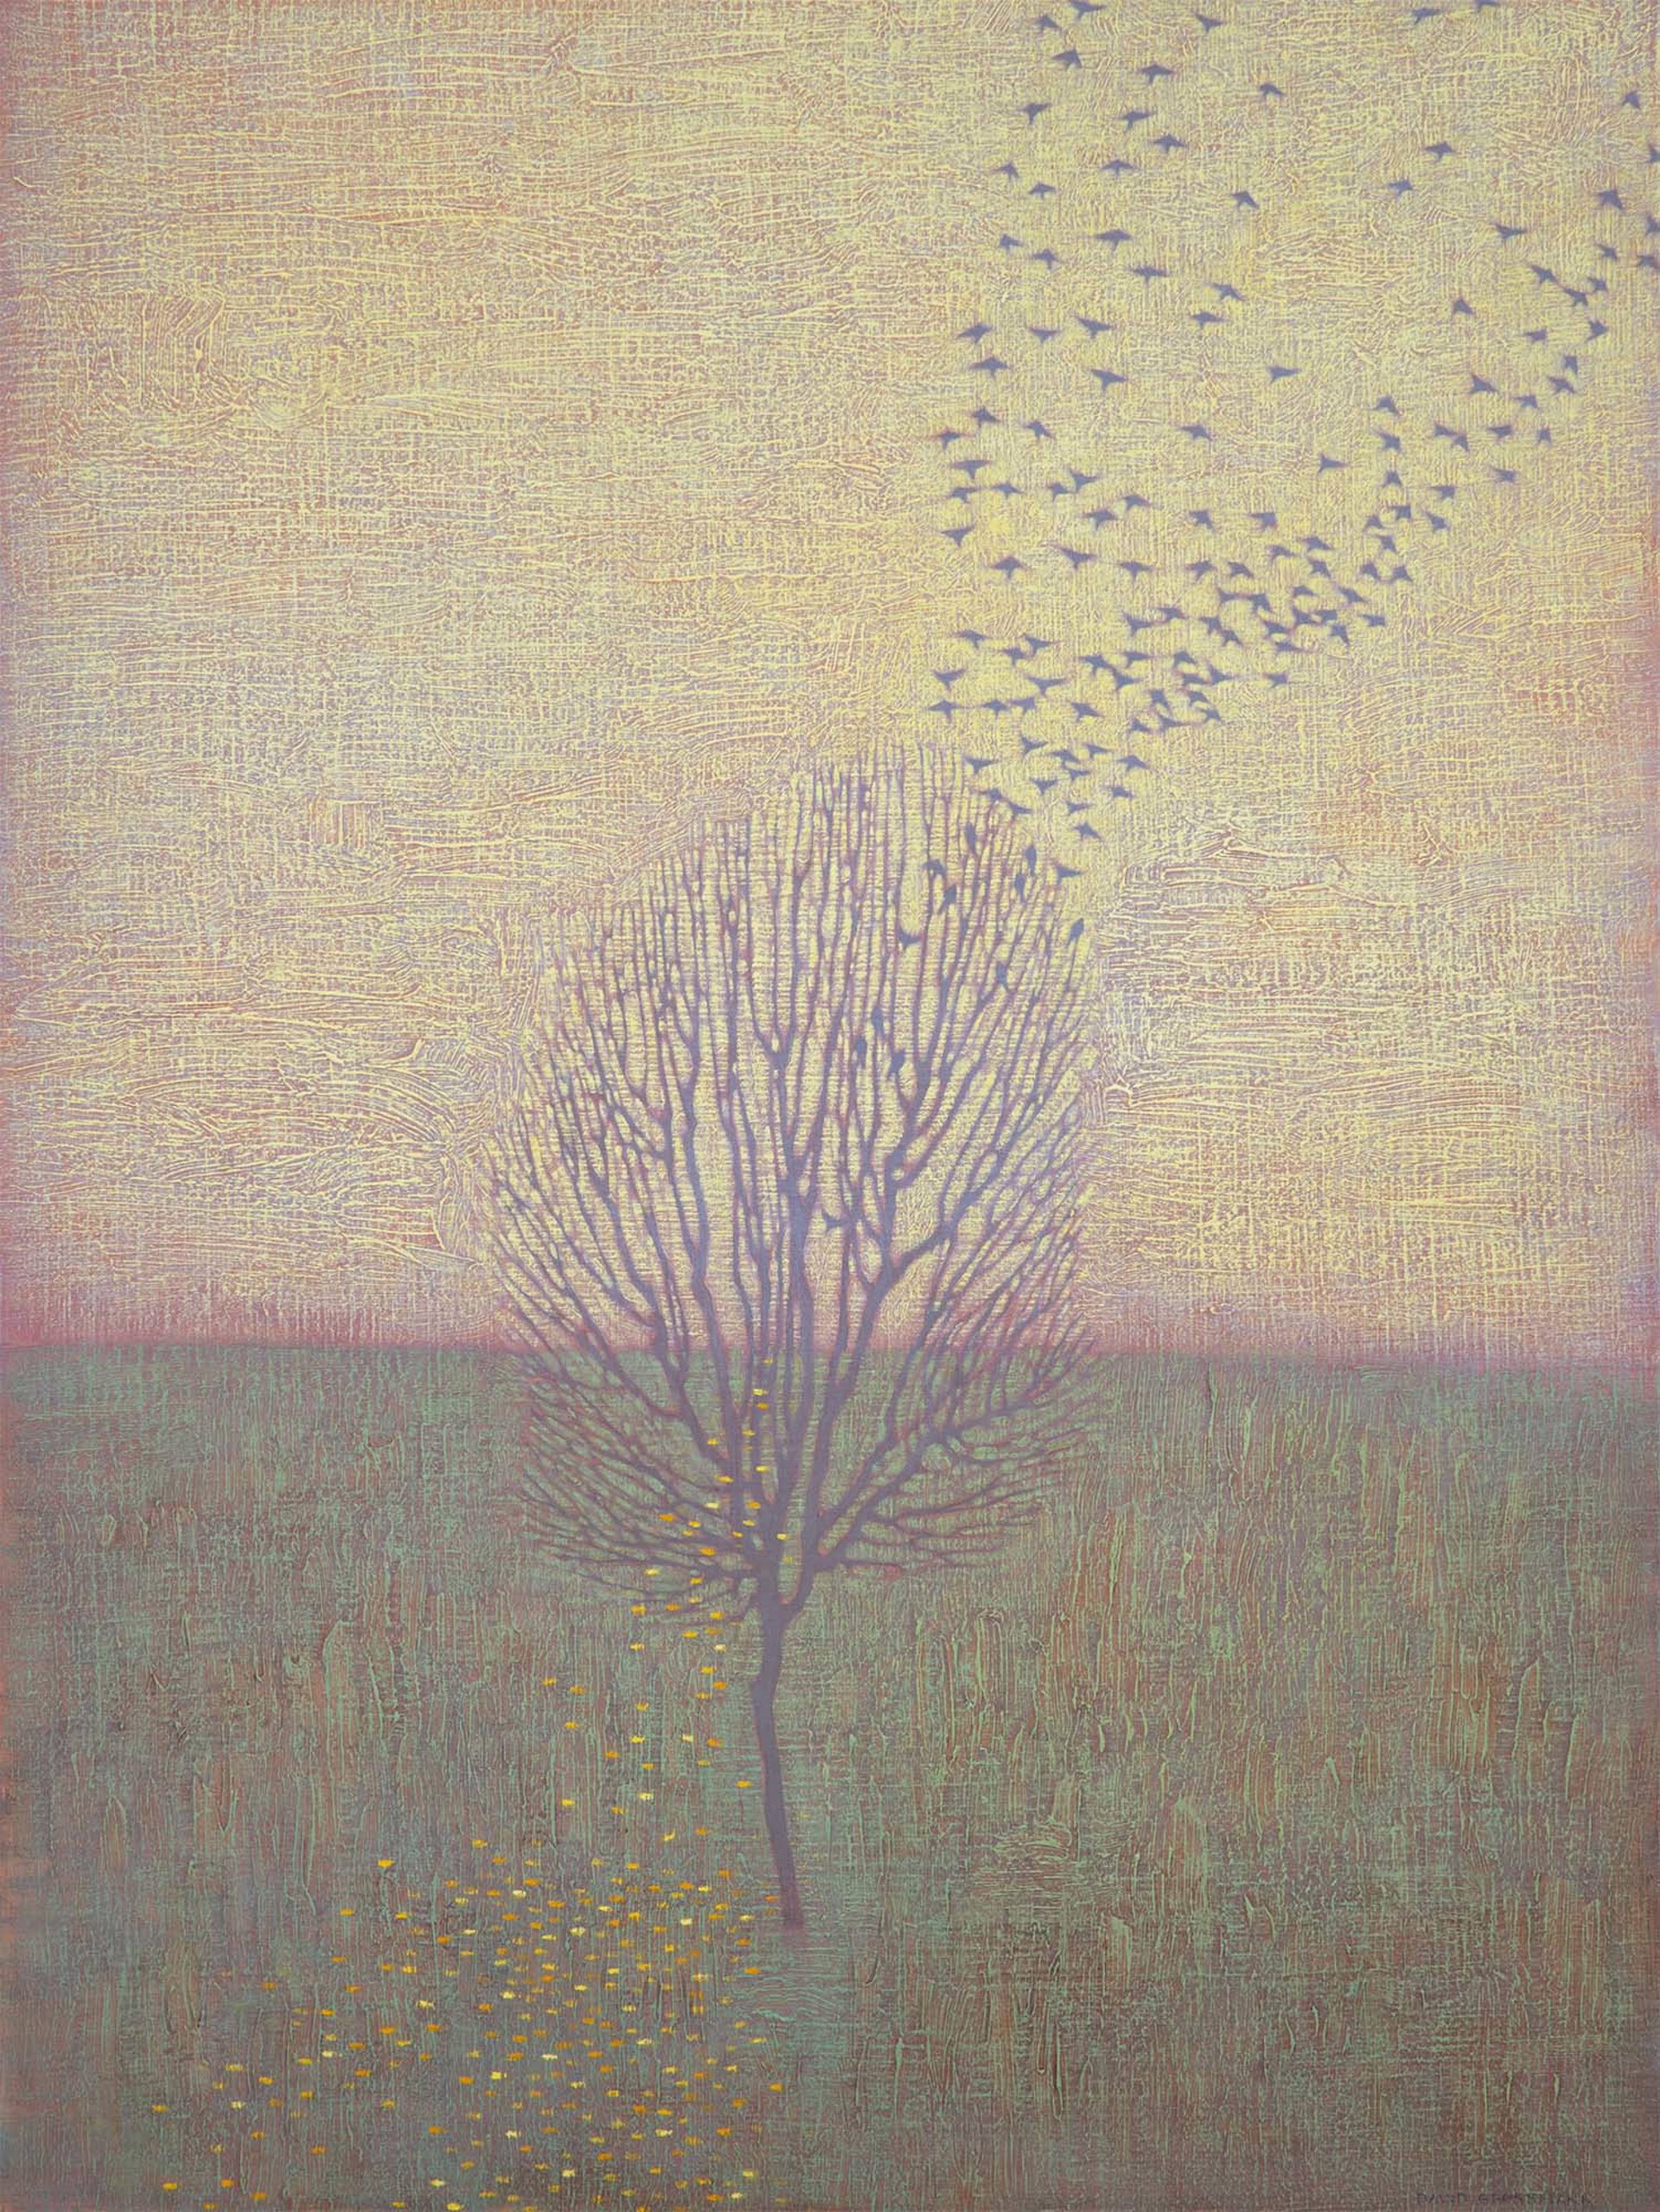 Rising Birds, Falling Leaves by David Grossmann